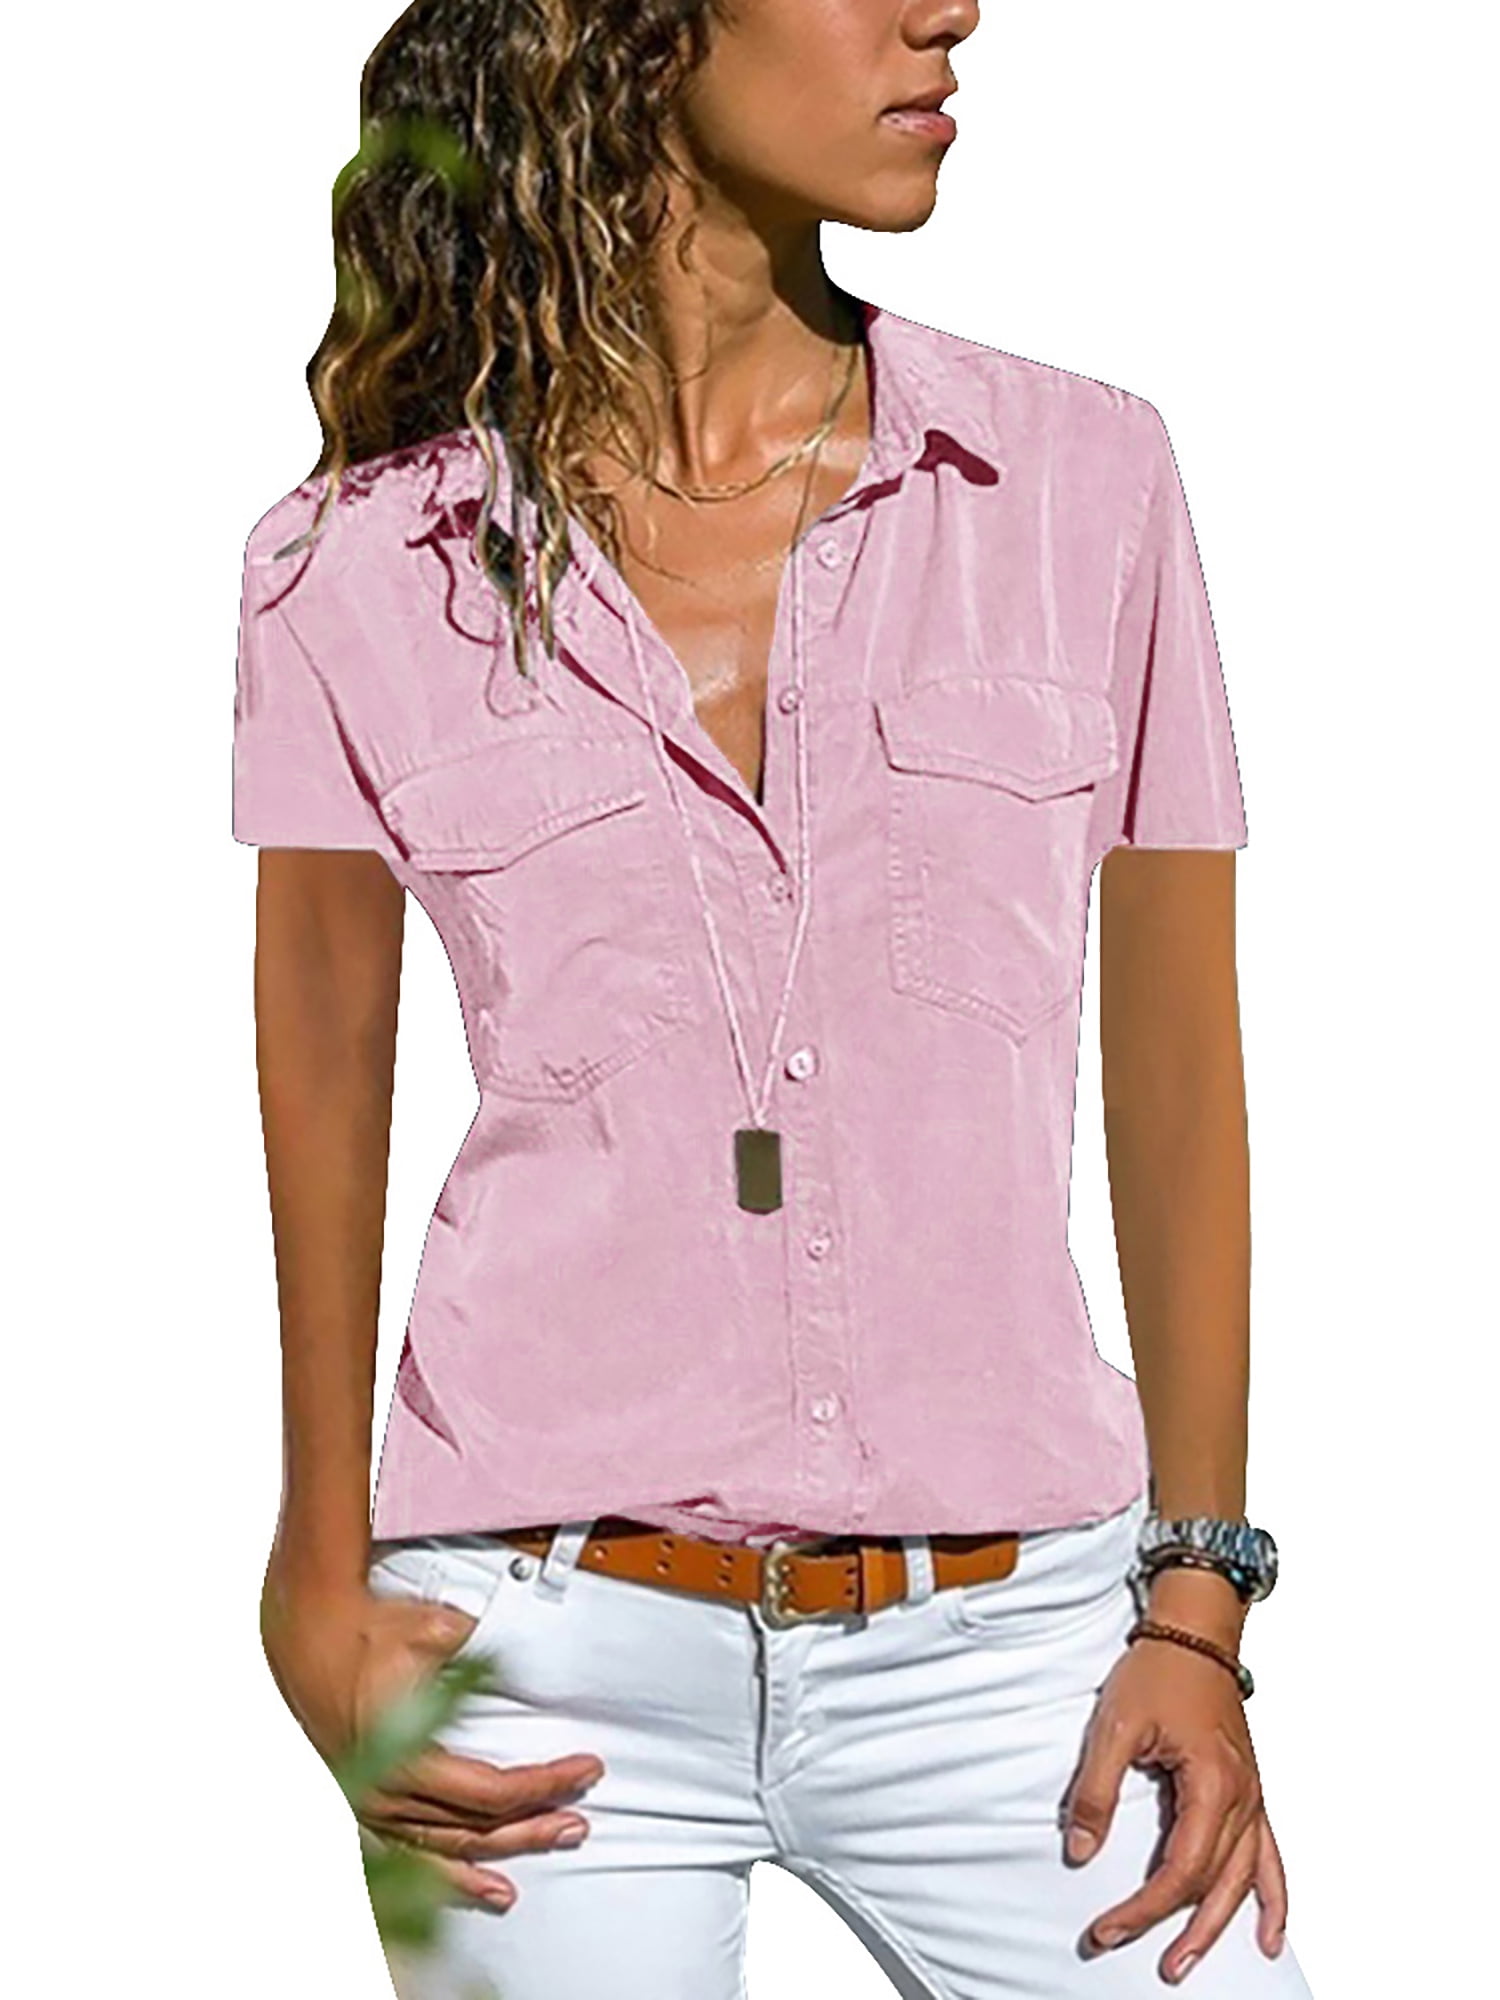 LilyLLL - LilyLLL Womens Short Sleeve Shirts V Neck Collared Button ...